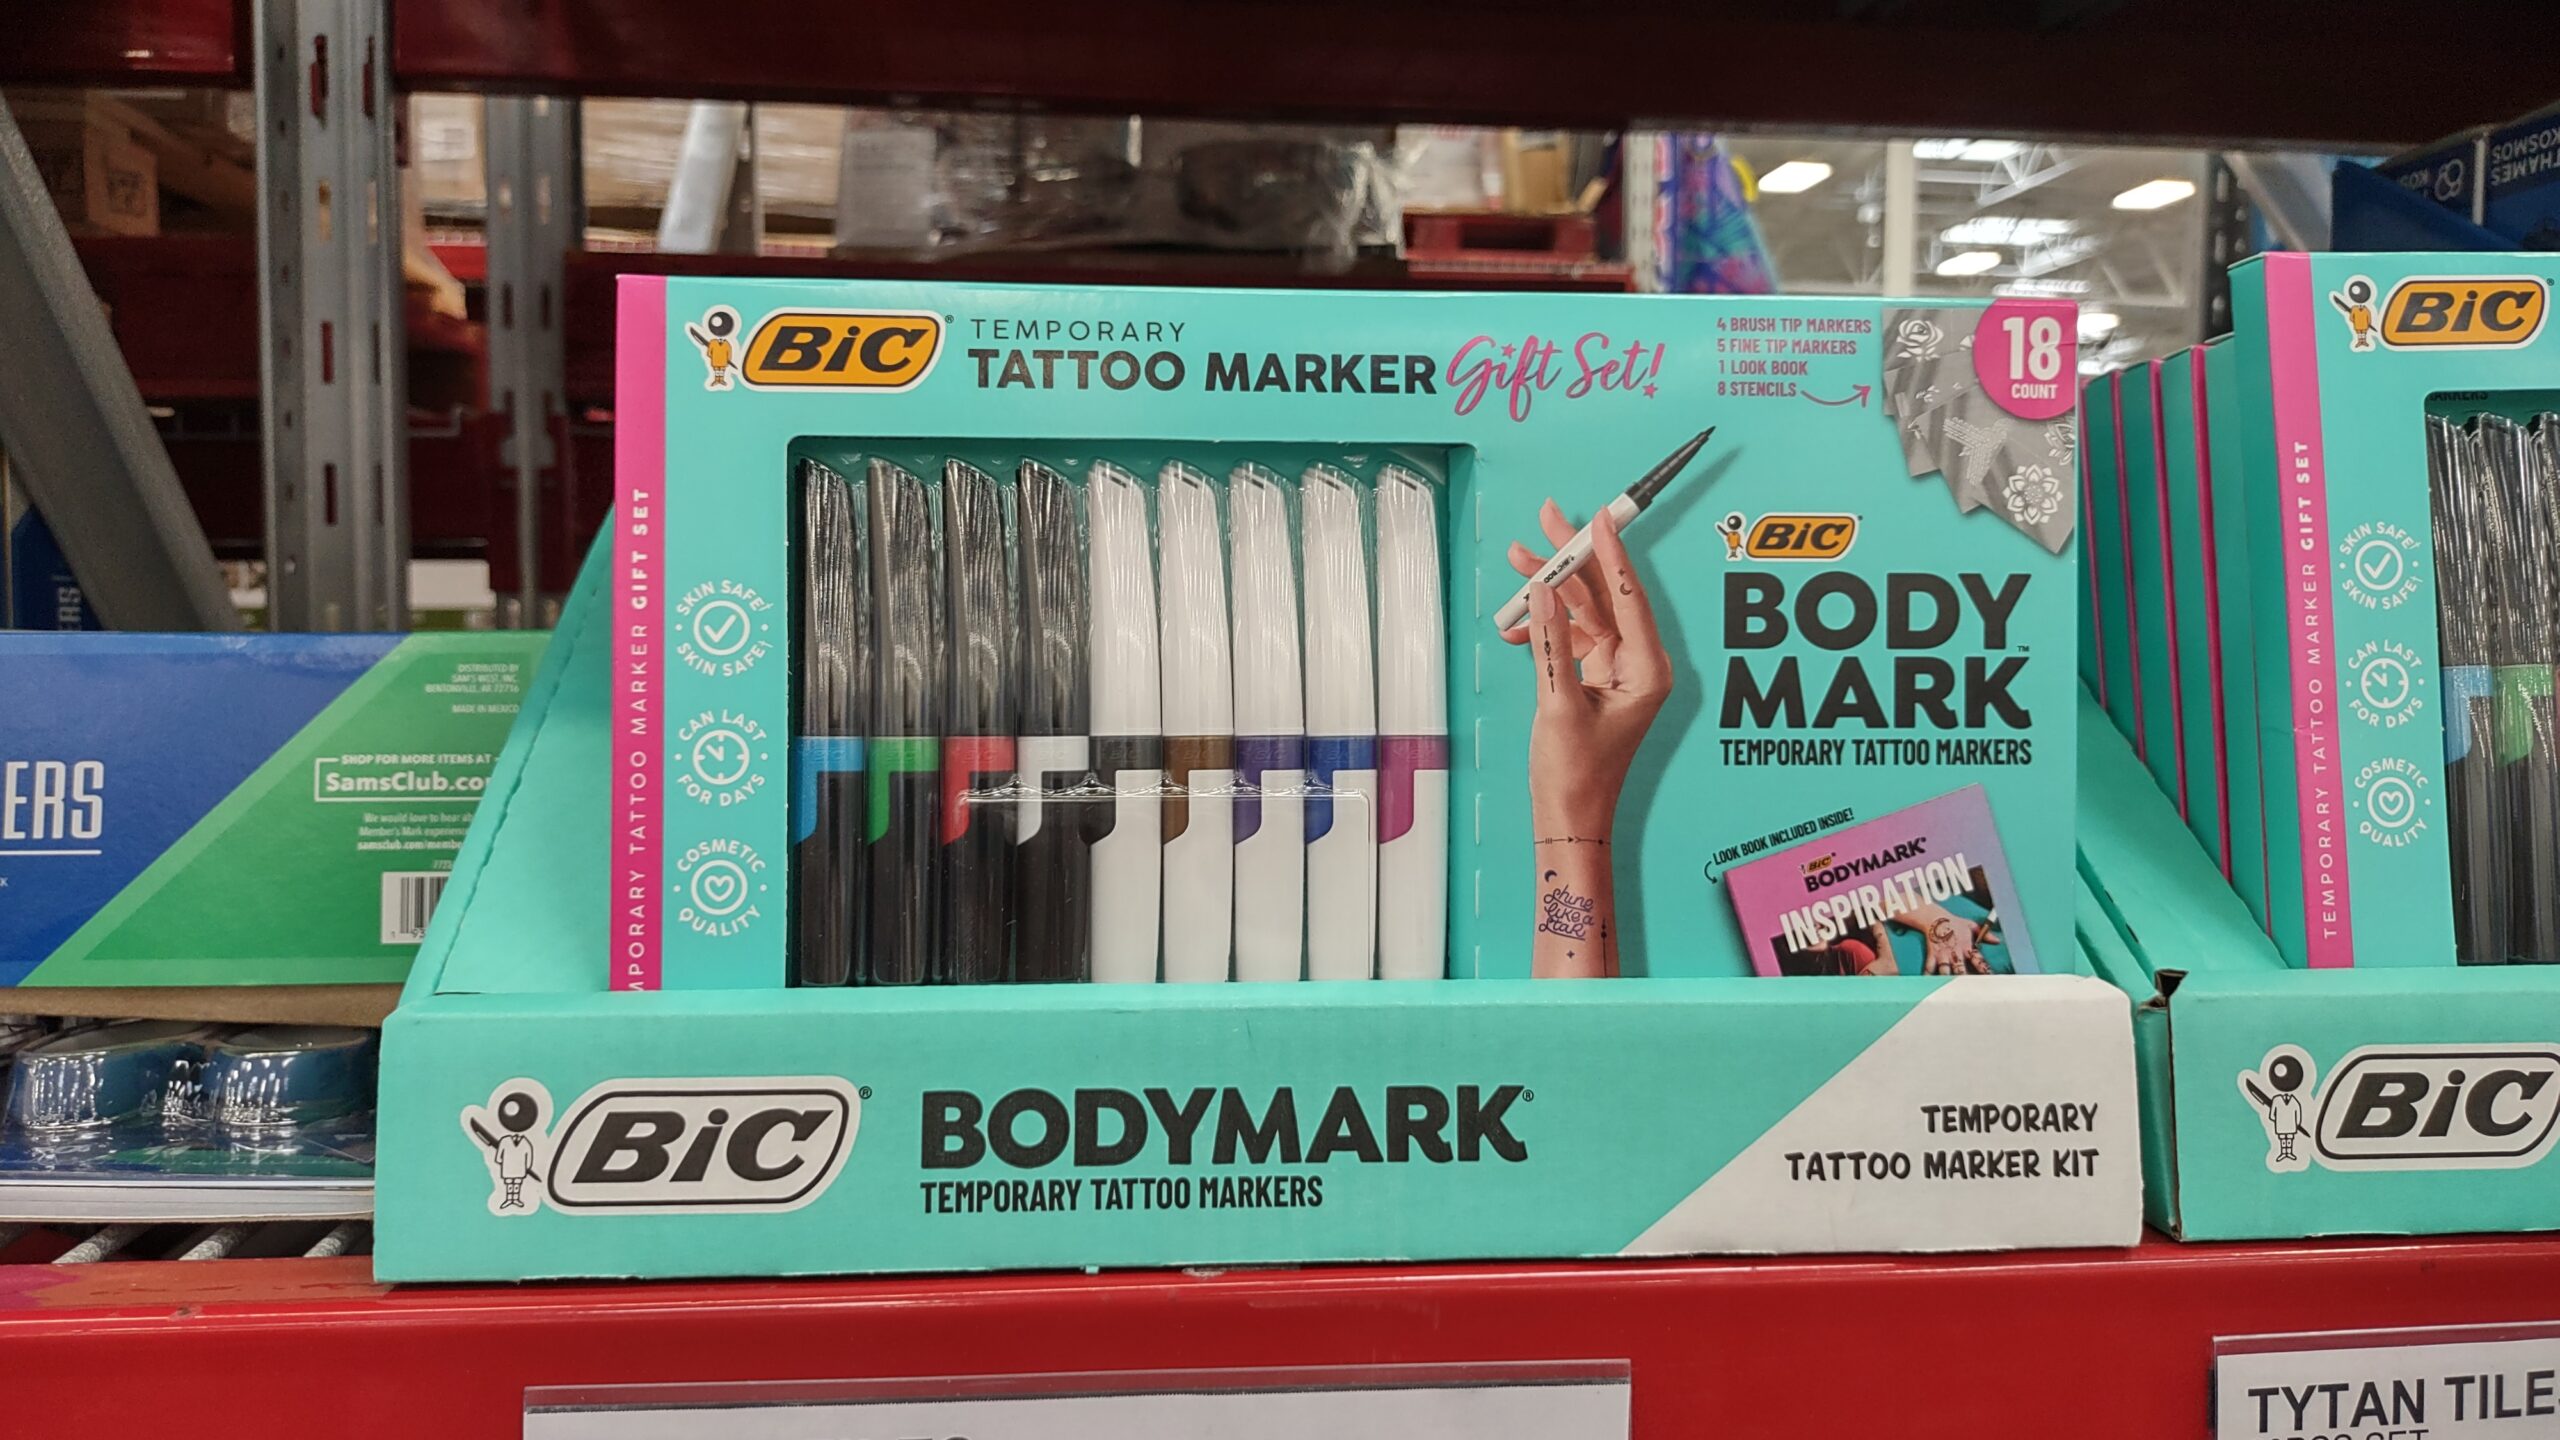 Bic Bodymark Tattoo Markers $7.41 at Sam’s